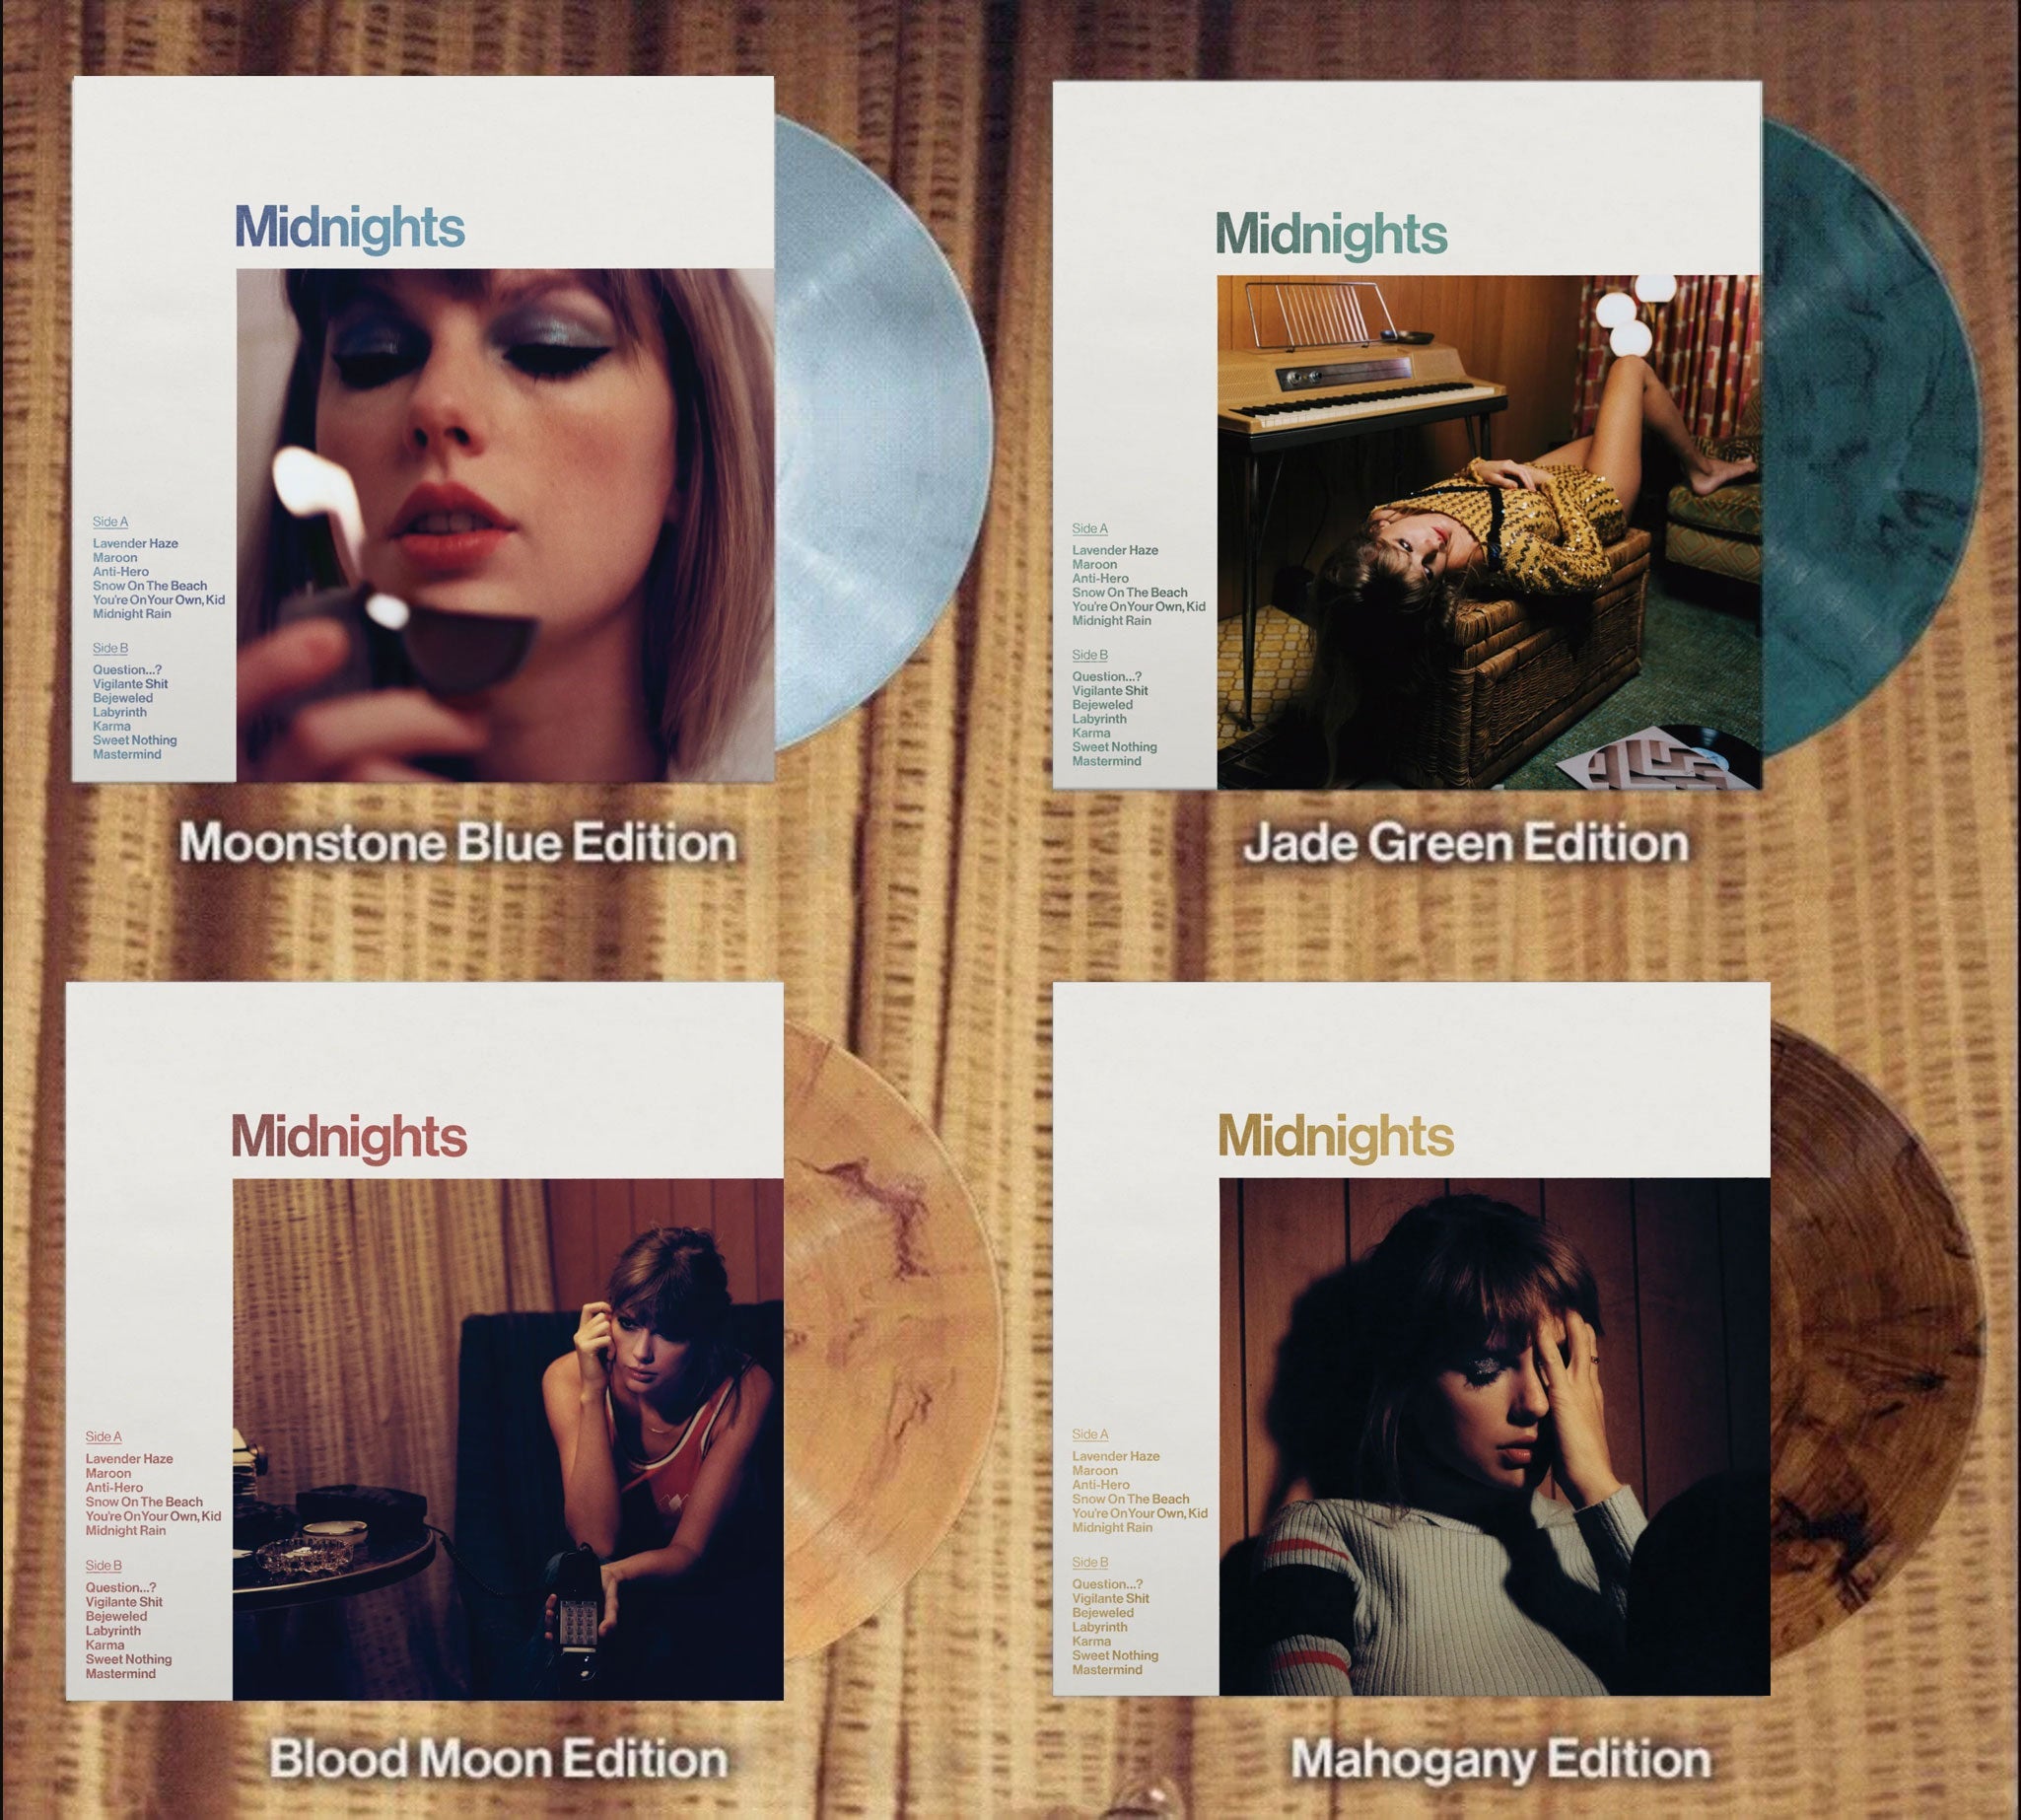 Taylor Swift - Midnights - LP